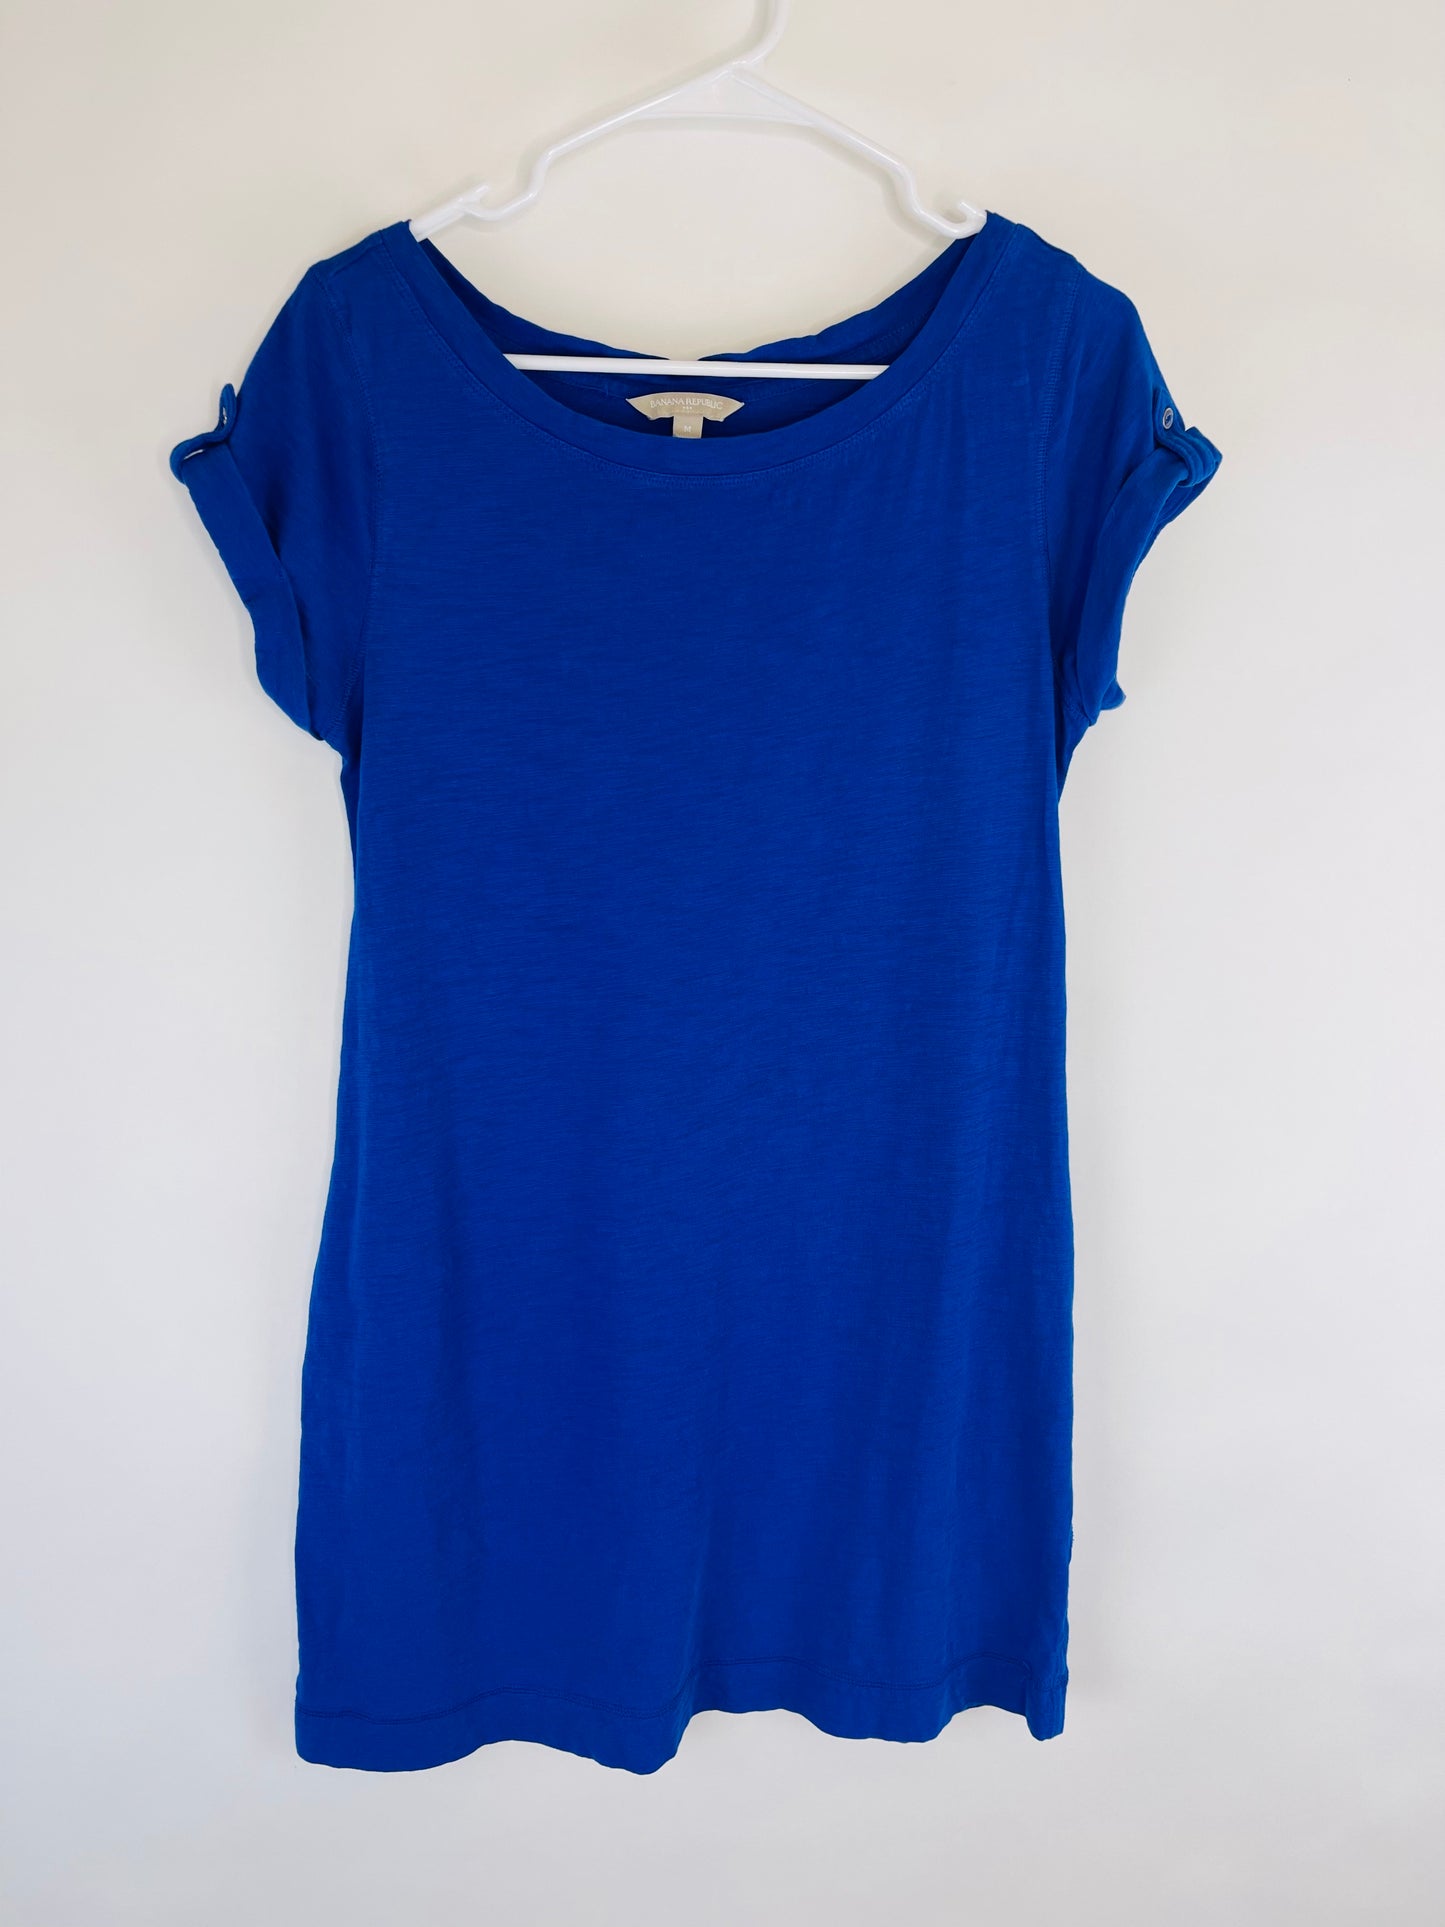 Banana Republic Blue T Shirt Dress - M